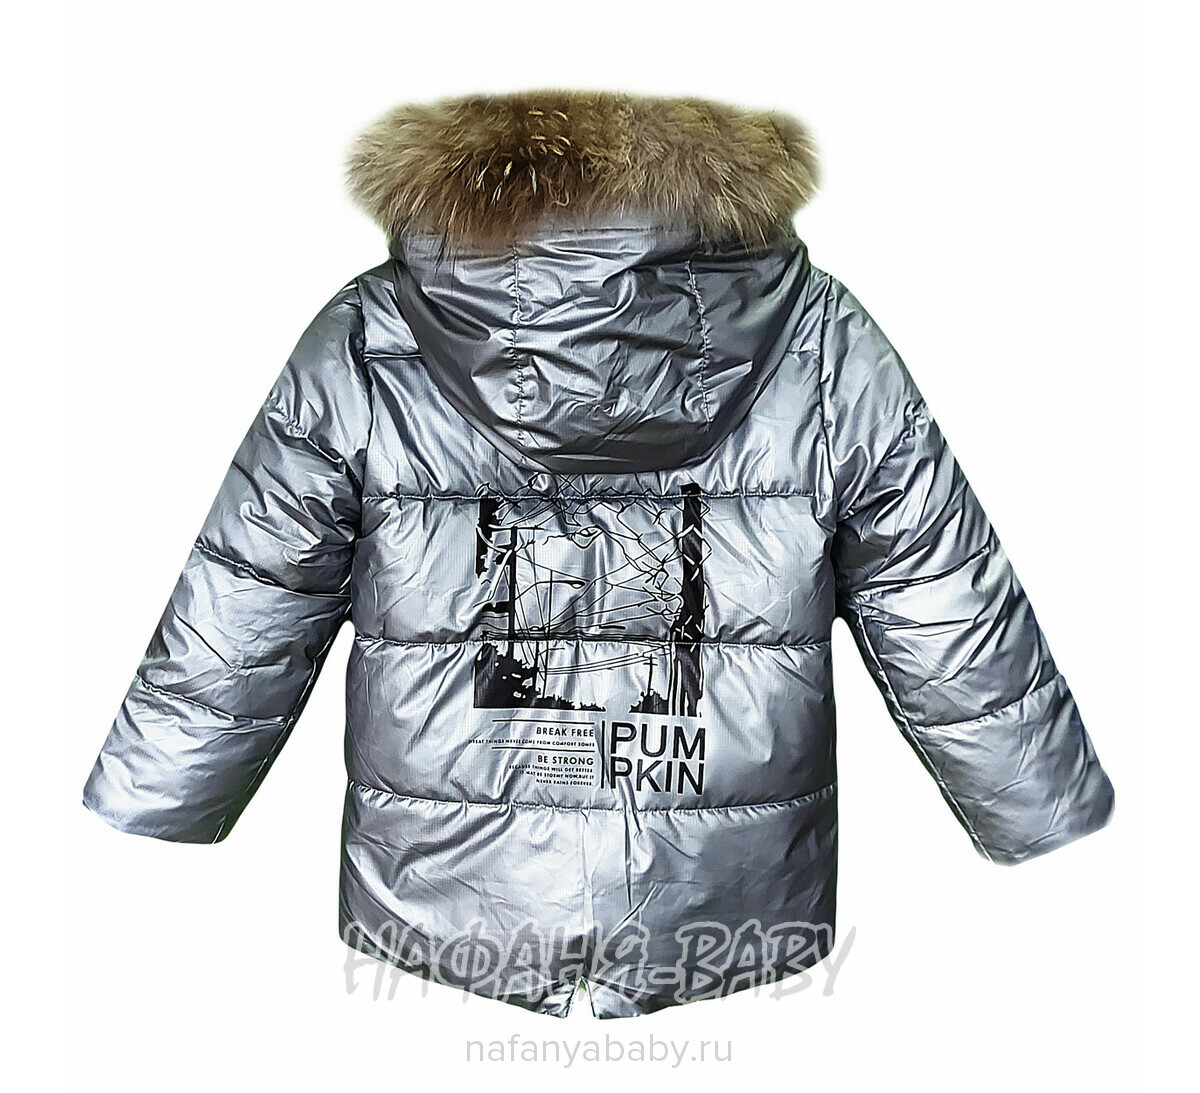 Зимний костюм DELFIN FREE арт: 2290, 0-12 мес, 1-4 года, цвет серый, оптом Китай (Пекин)